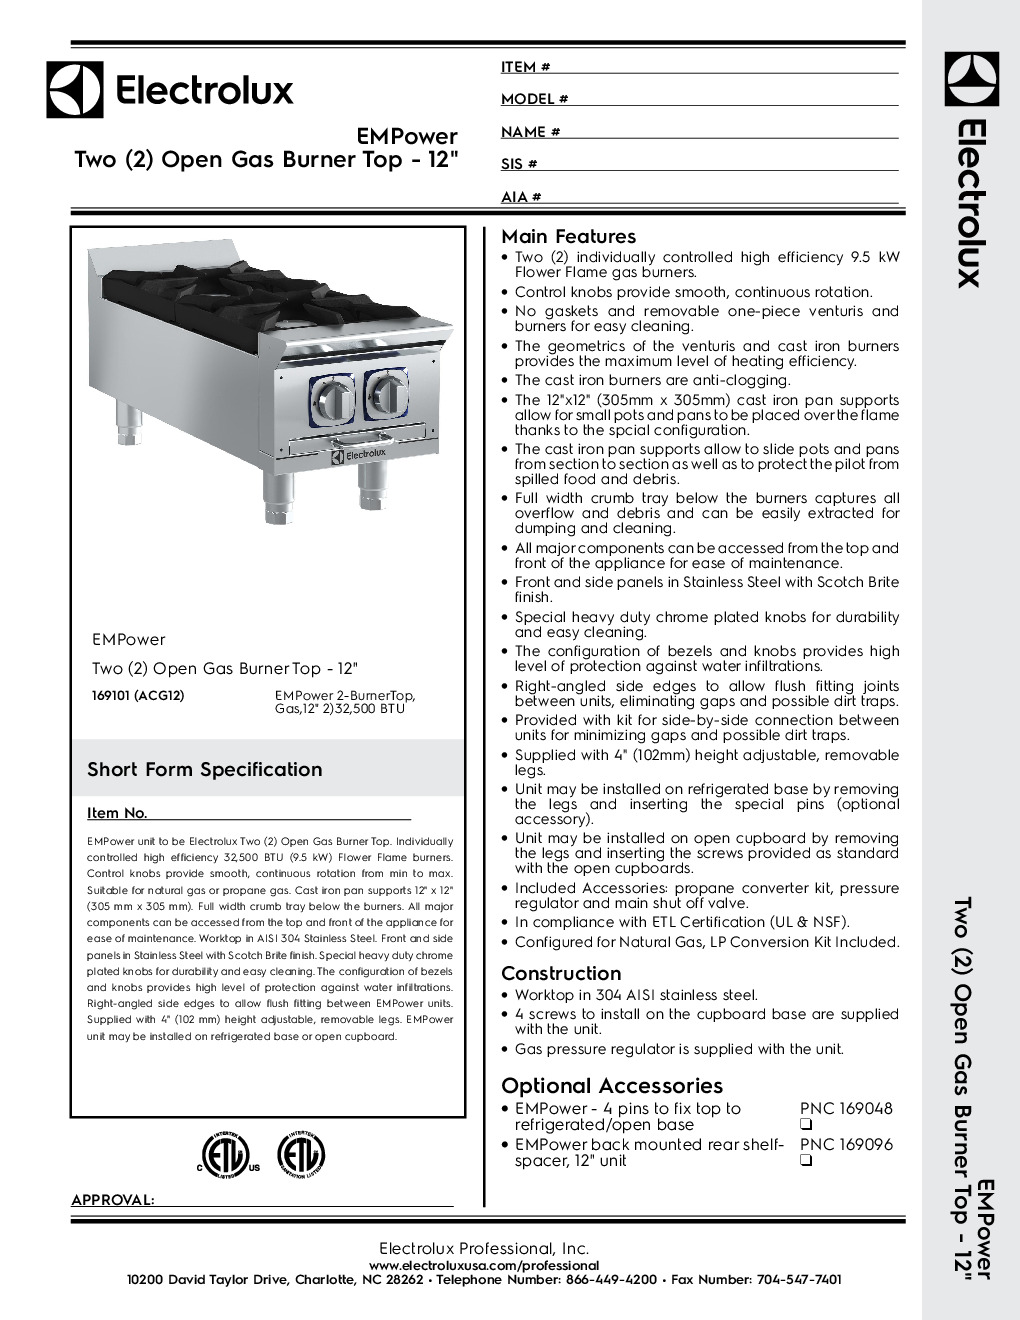 Electrolux 169101 Gas Countertop Hotplate